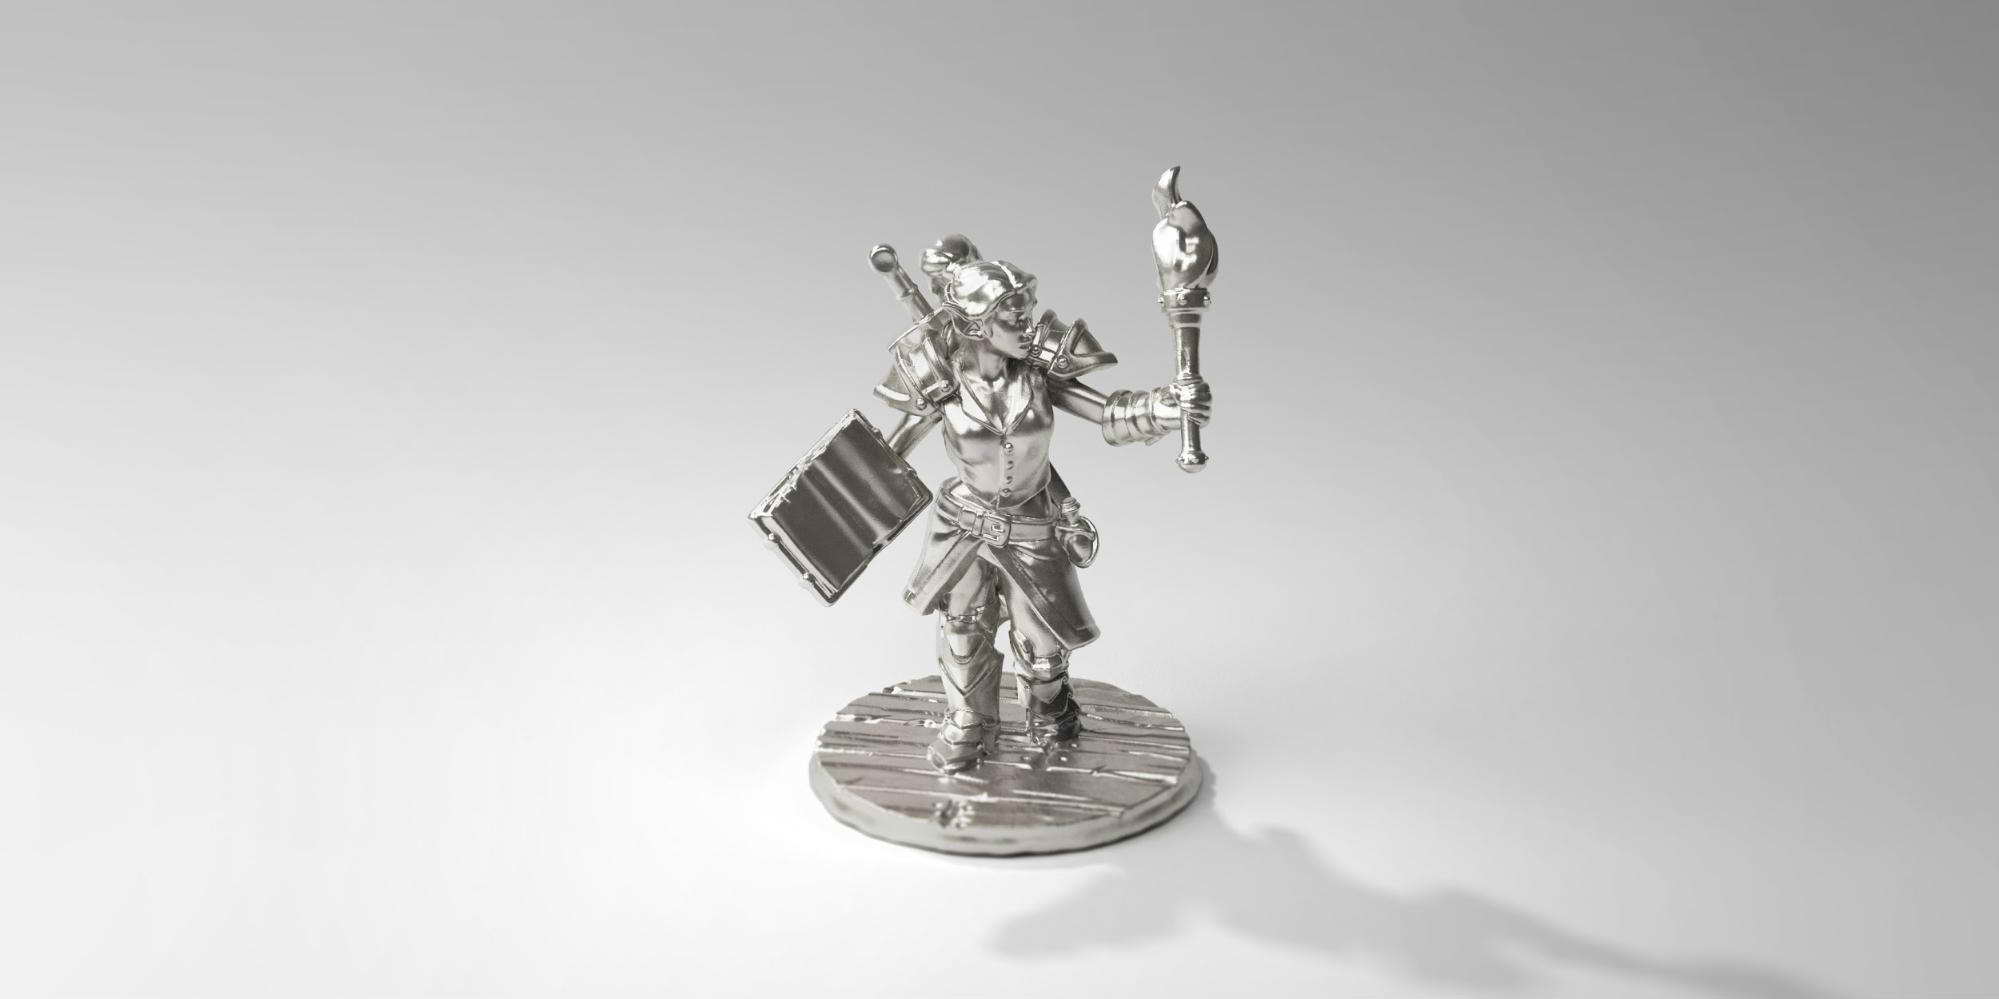 custom metal statue souvenir gift